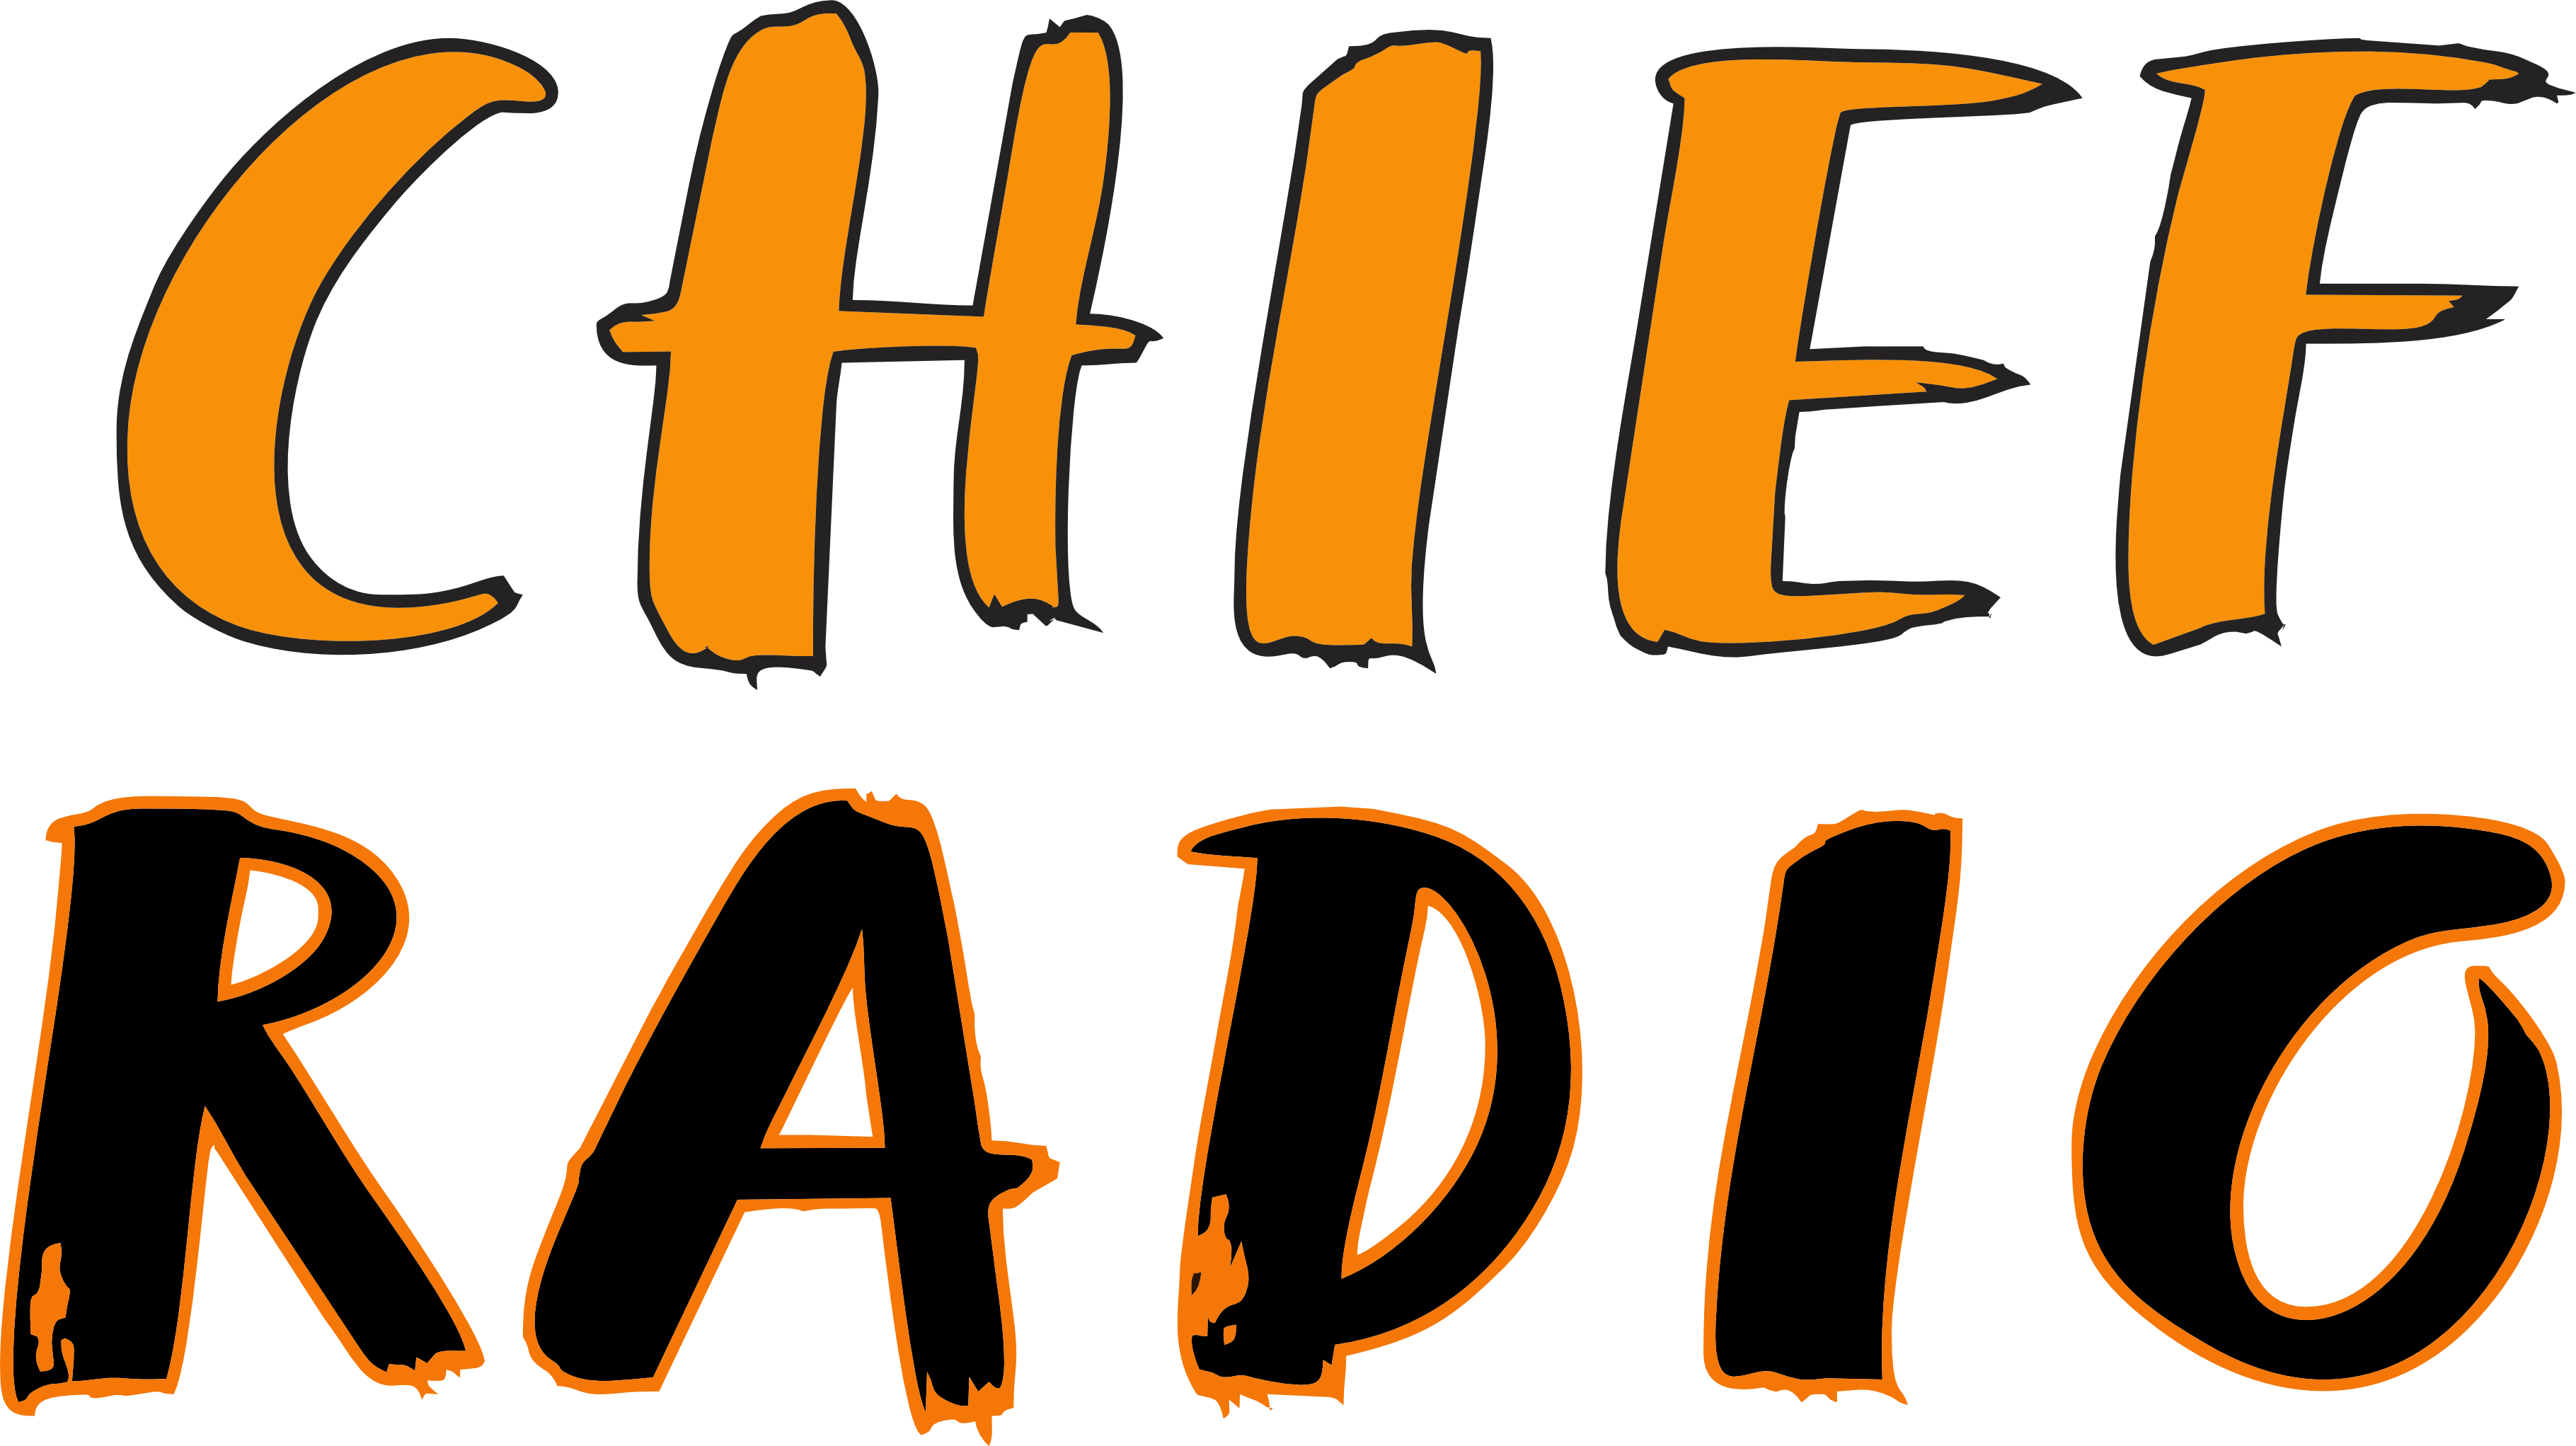 www.chiefradio.com